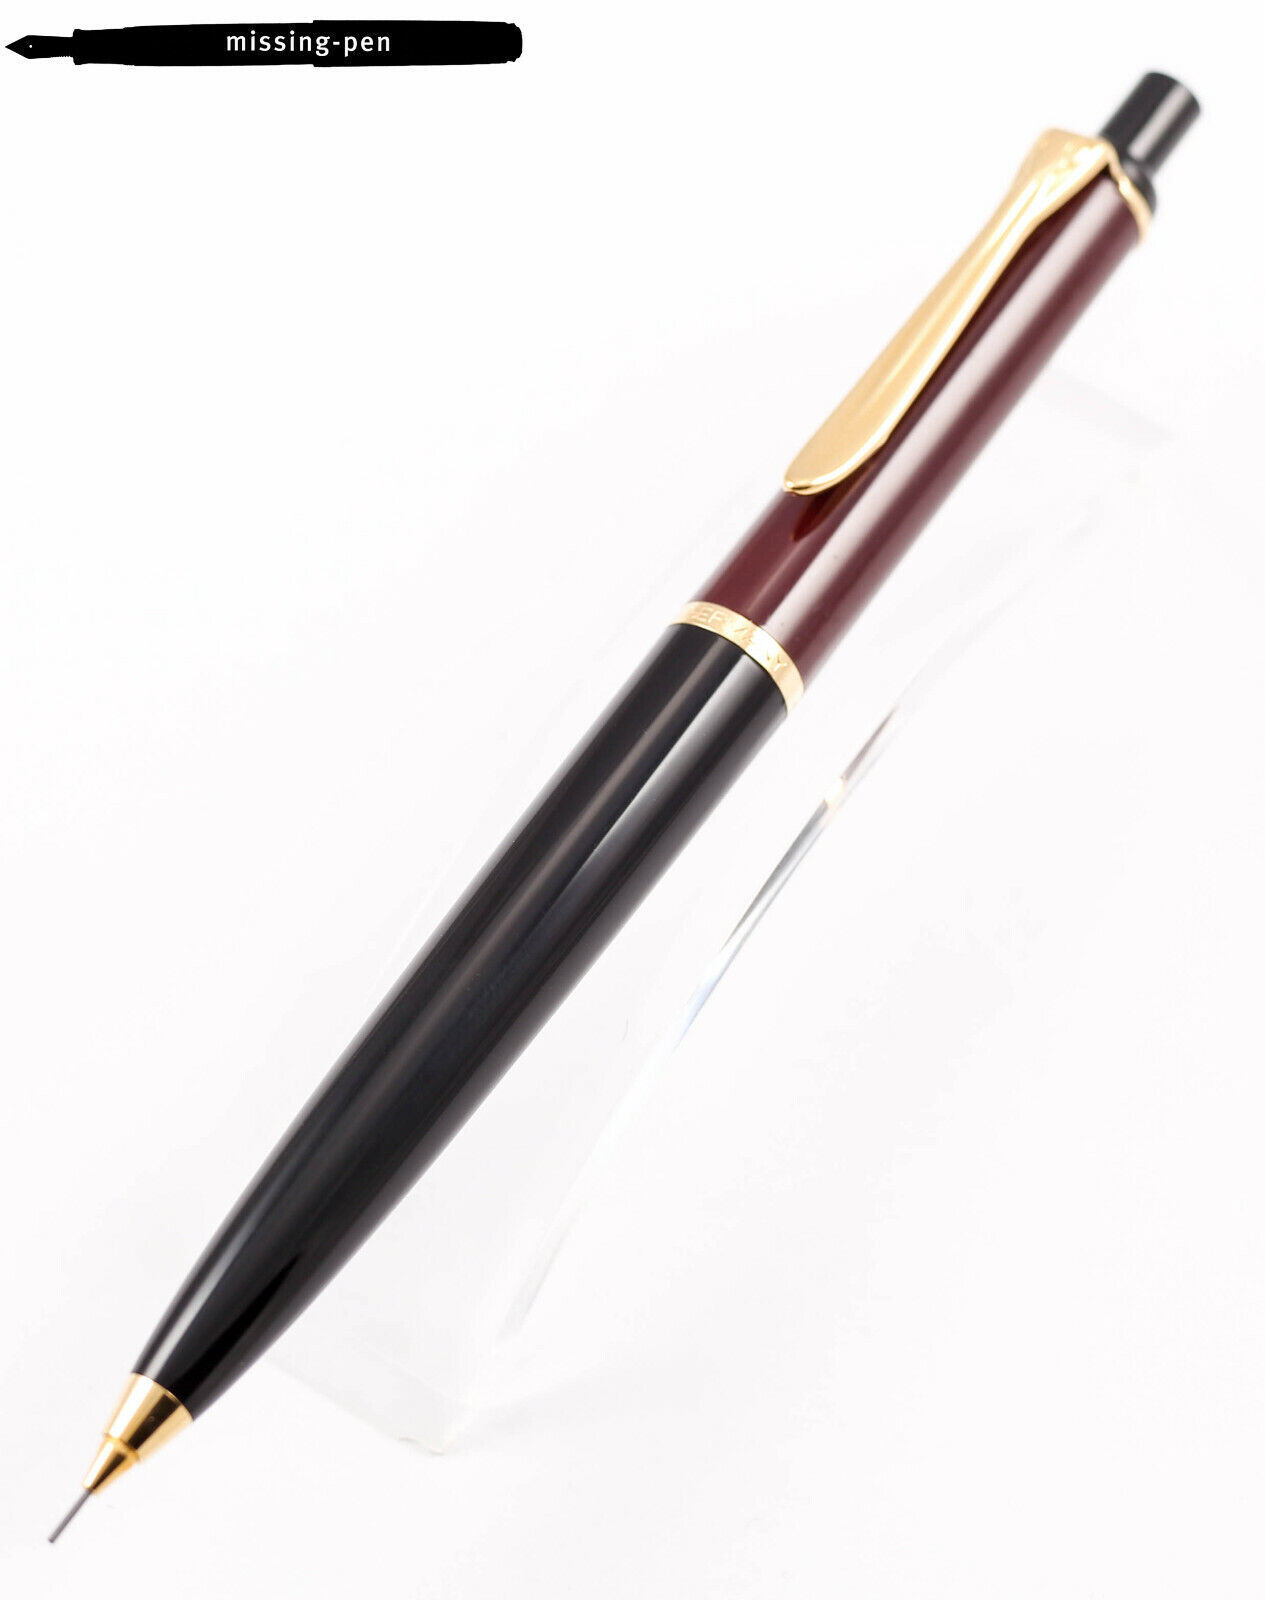 Old Style Pelikan D150 Push Mechanism Pencil (0.5 mm) in Black-Bordeaux Red